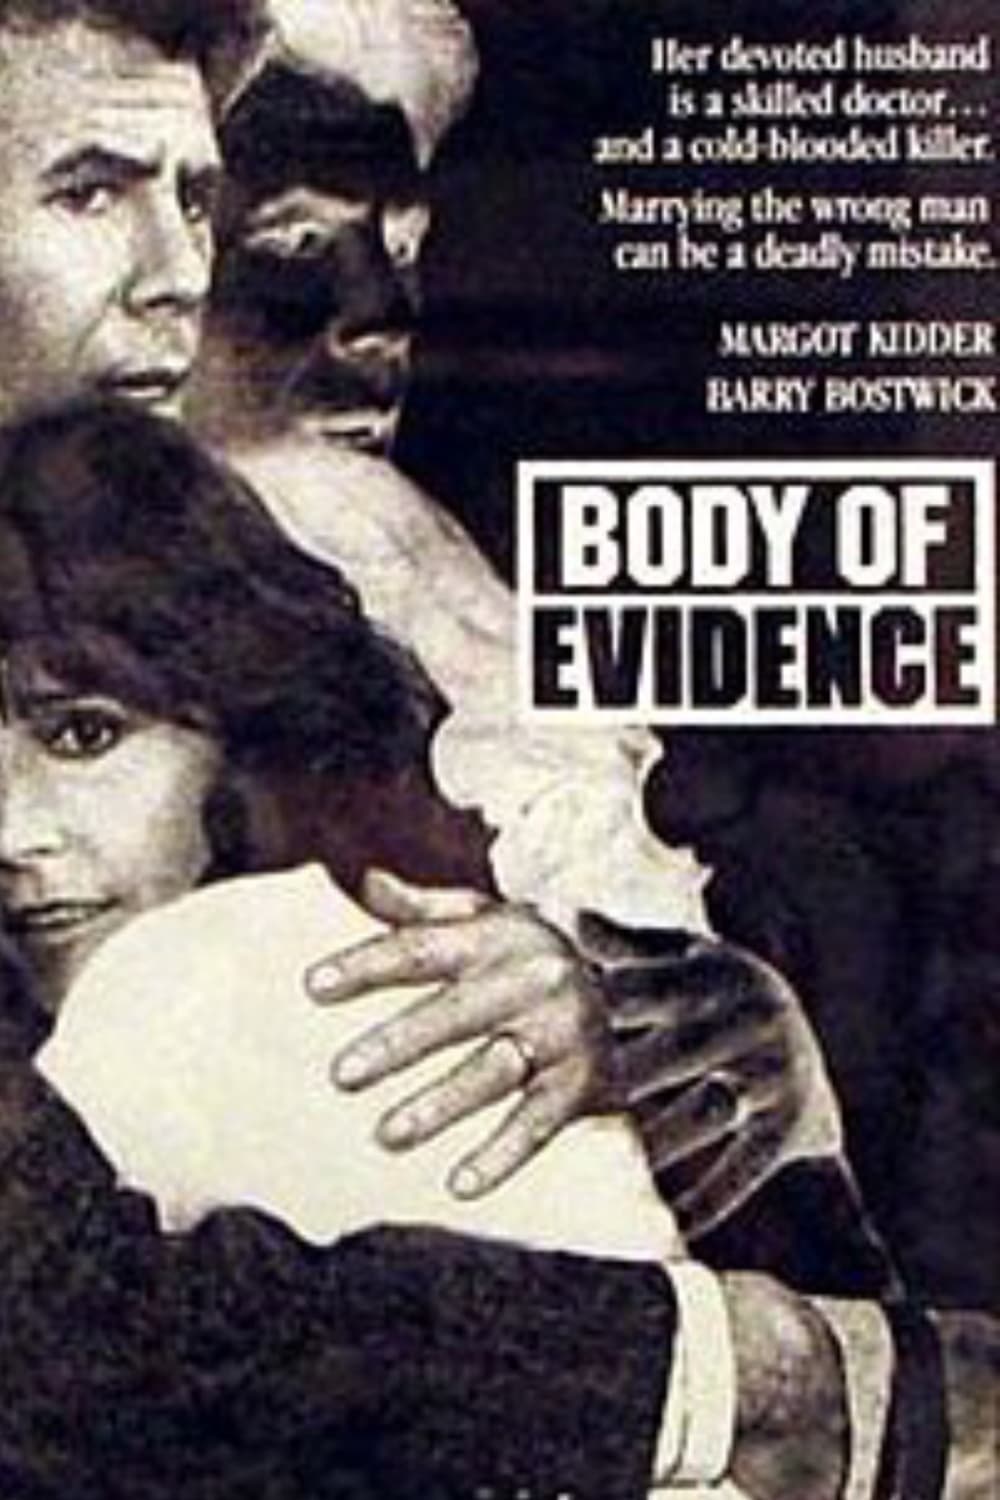 Body of Evidence (1988)